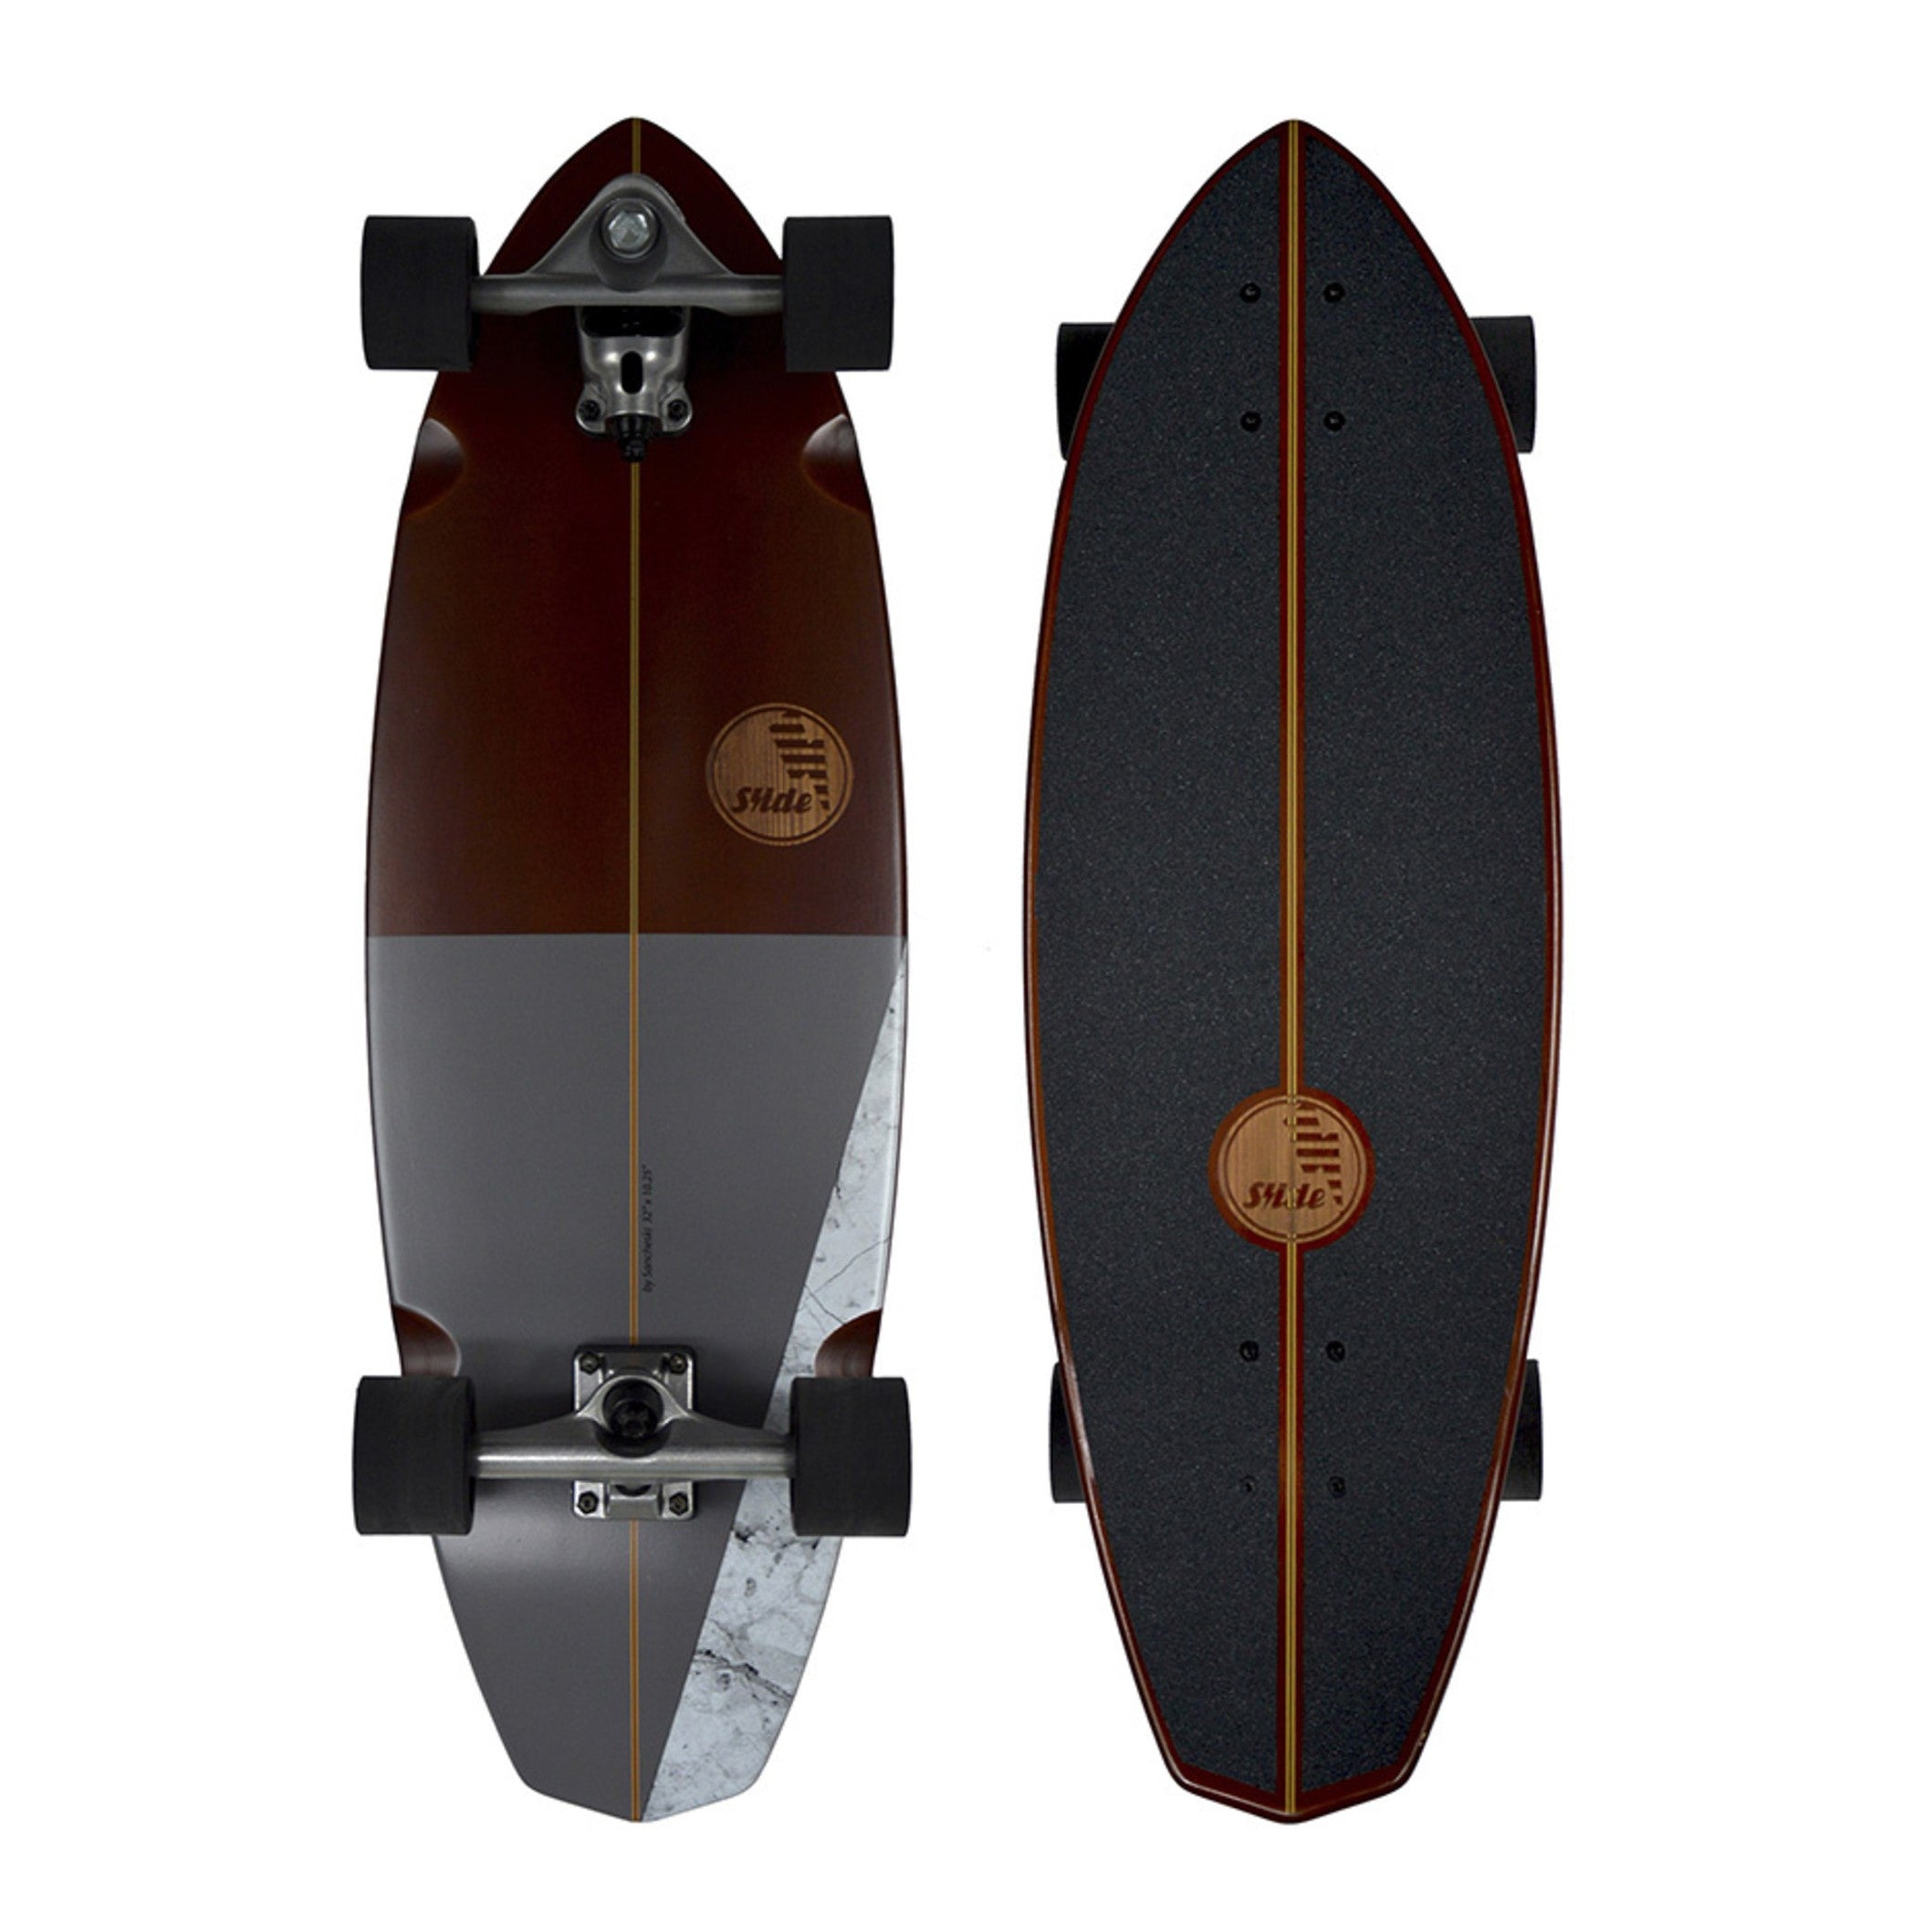 Slide Surfskates & Training Boards for Sale Online | Freeride 